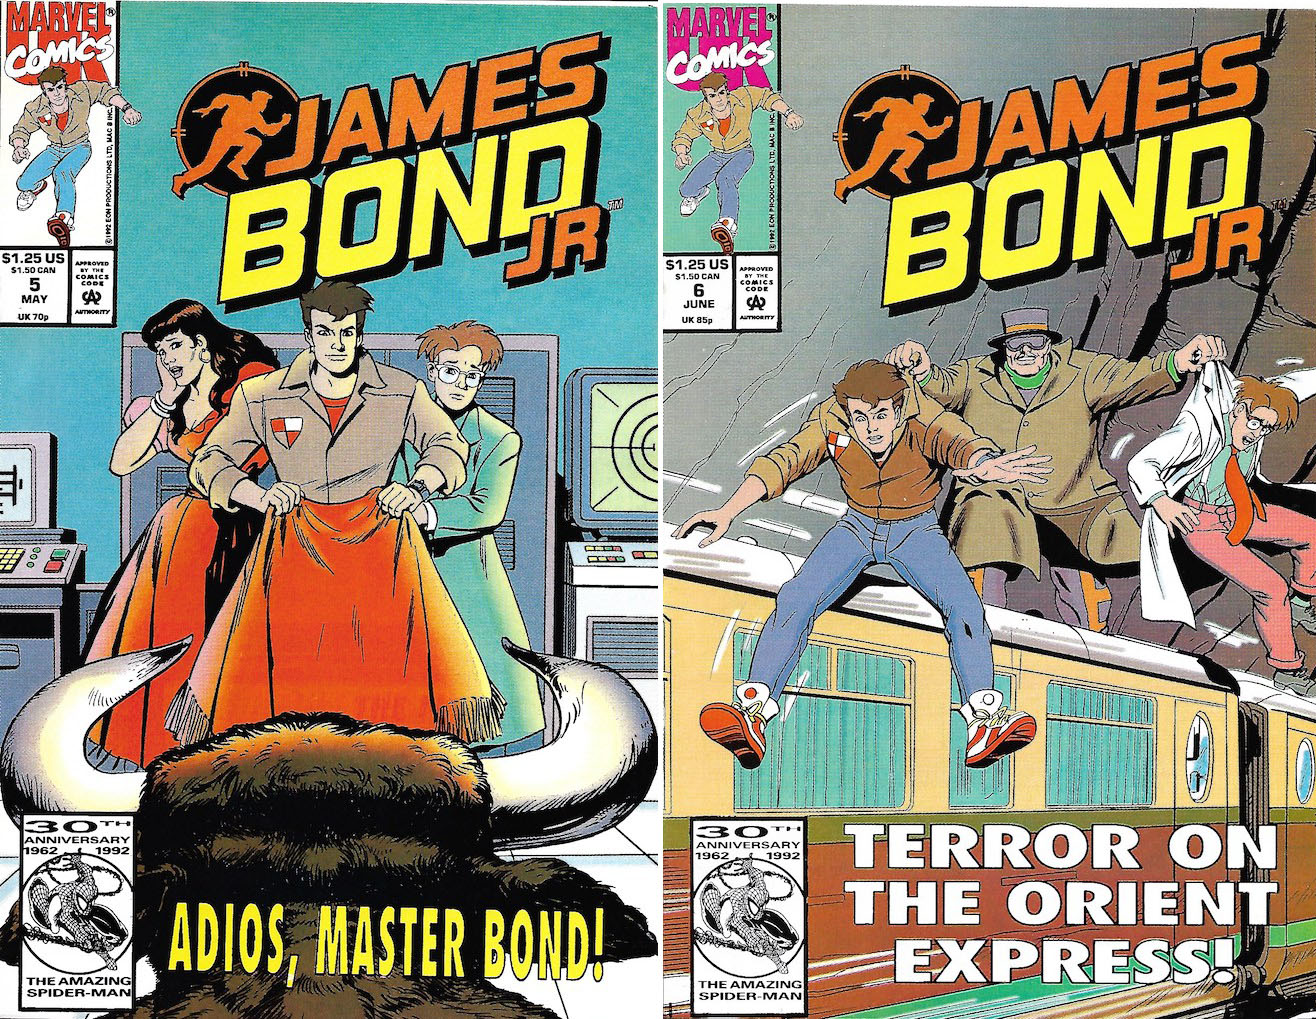 The Book Bond: JAMES BOND JR. Marvel Comics